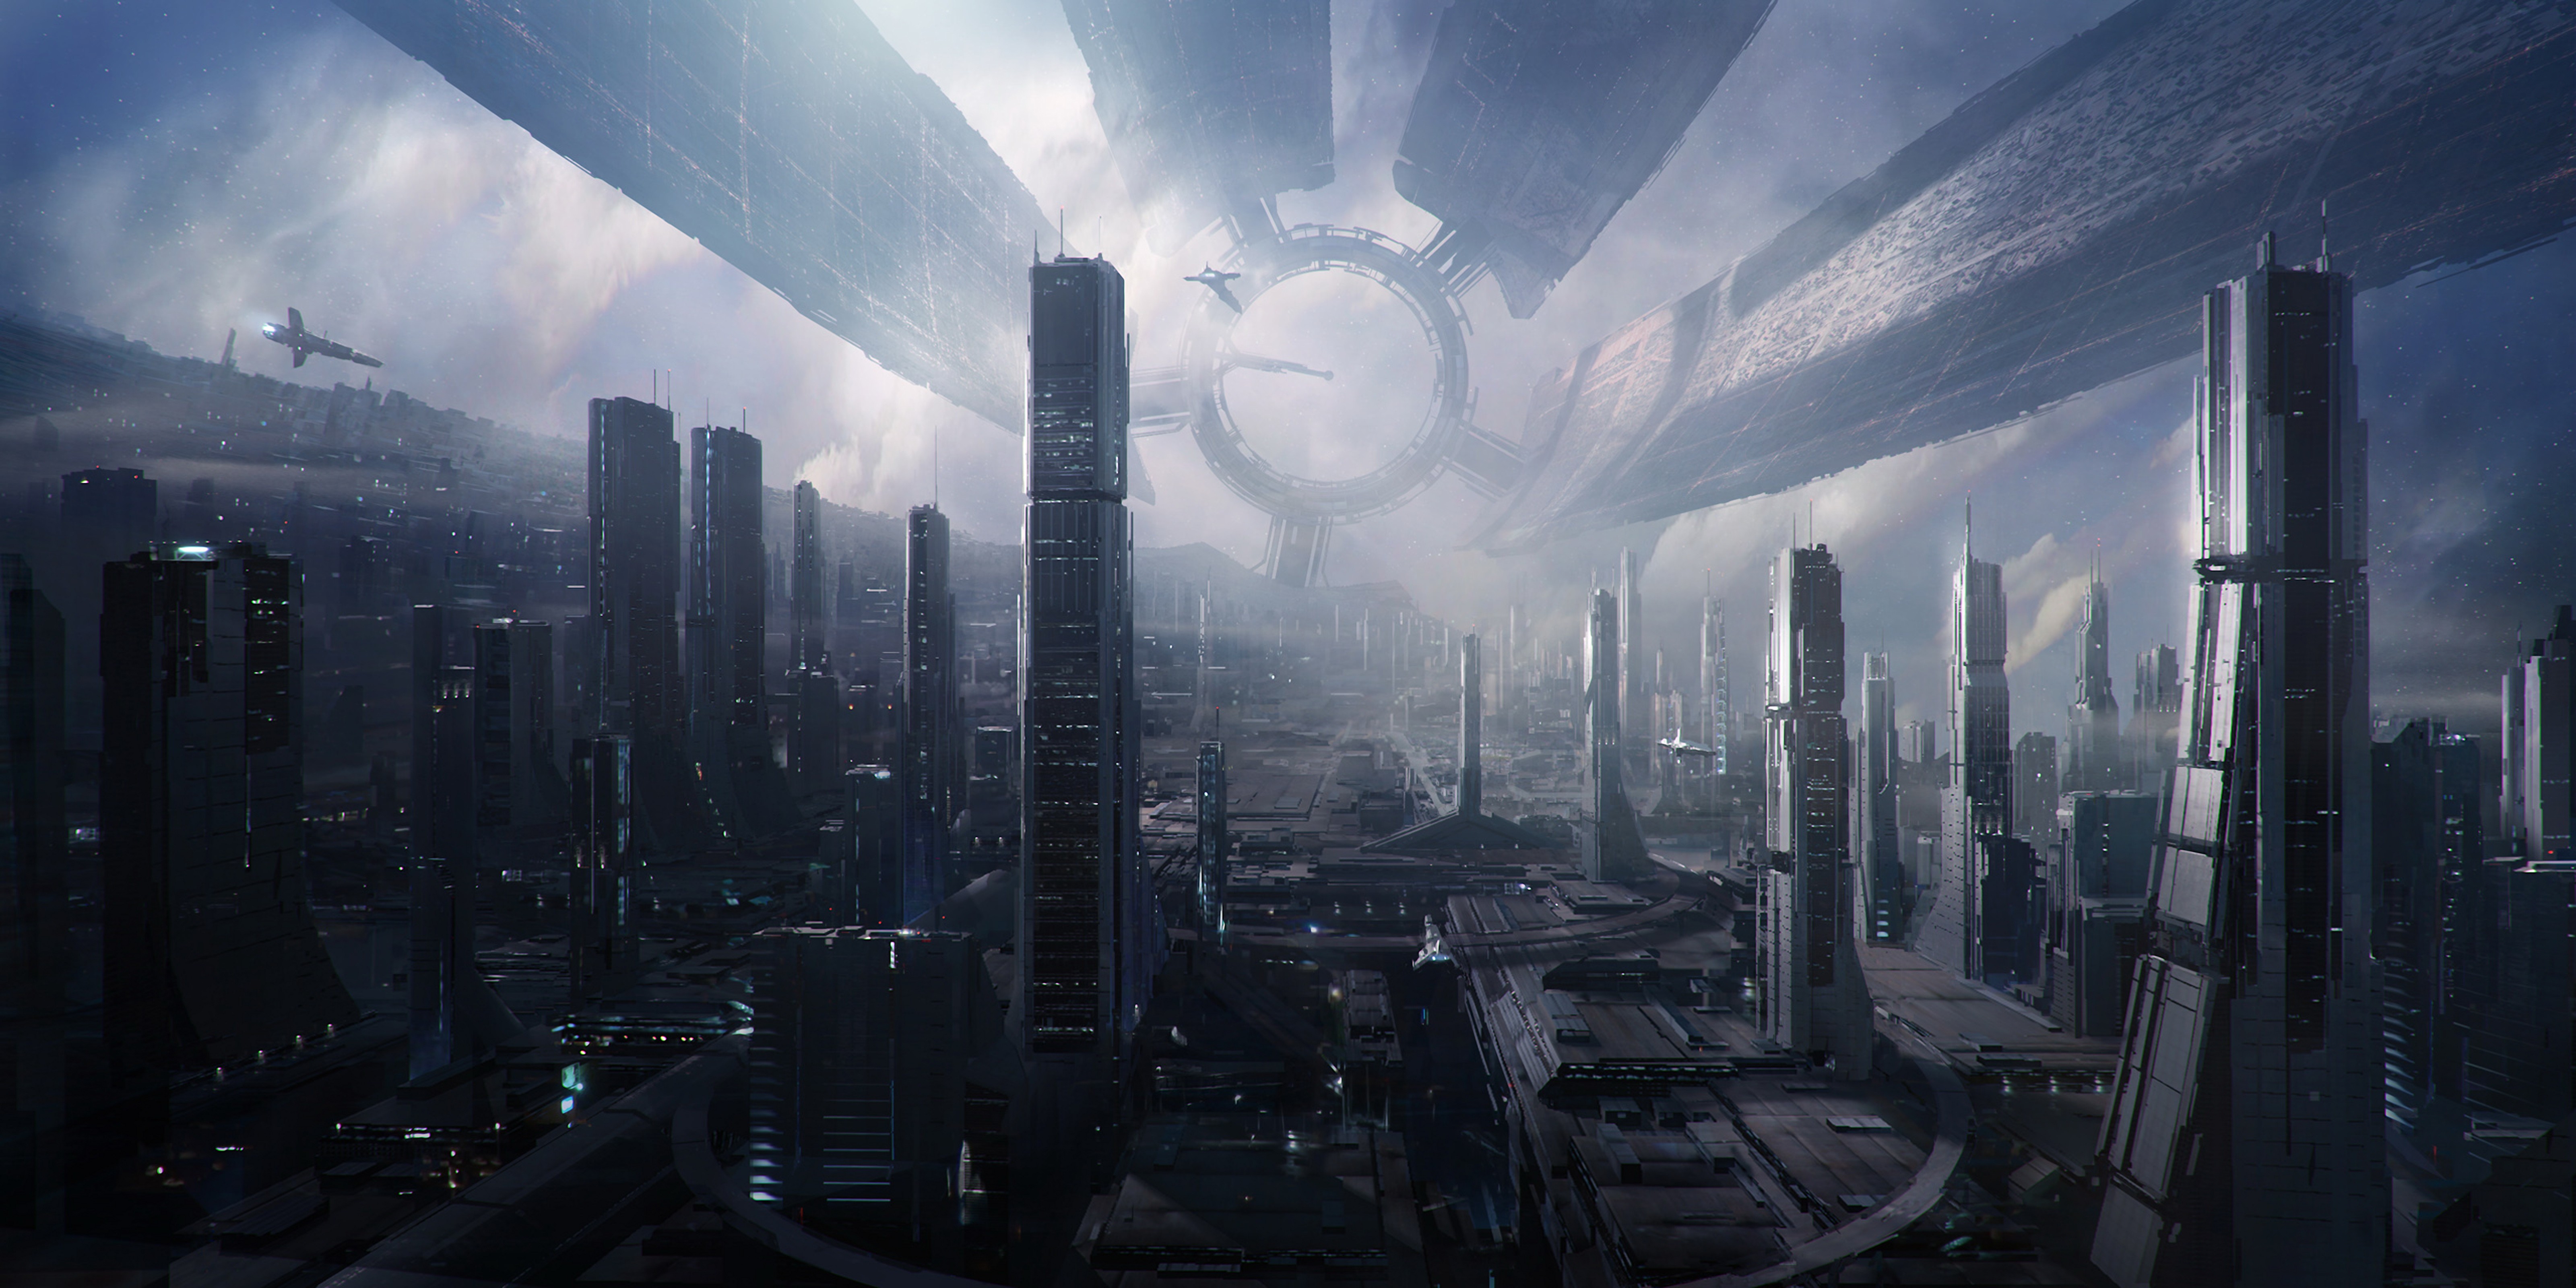 General 6400x3200 Mass Effect science fiction Citadel (Mass Effect) Bioware video games PC gaming futuristic